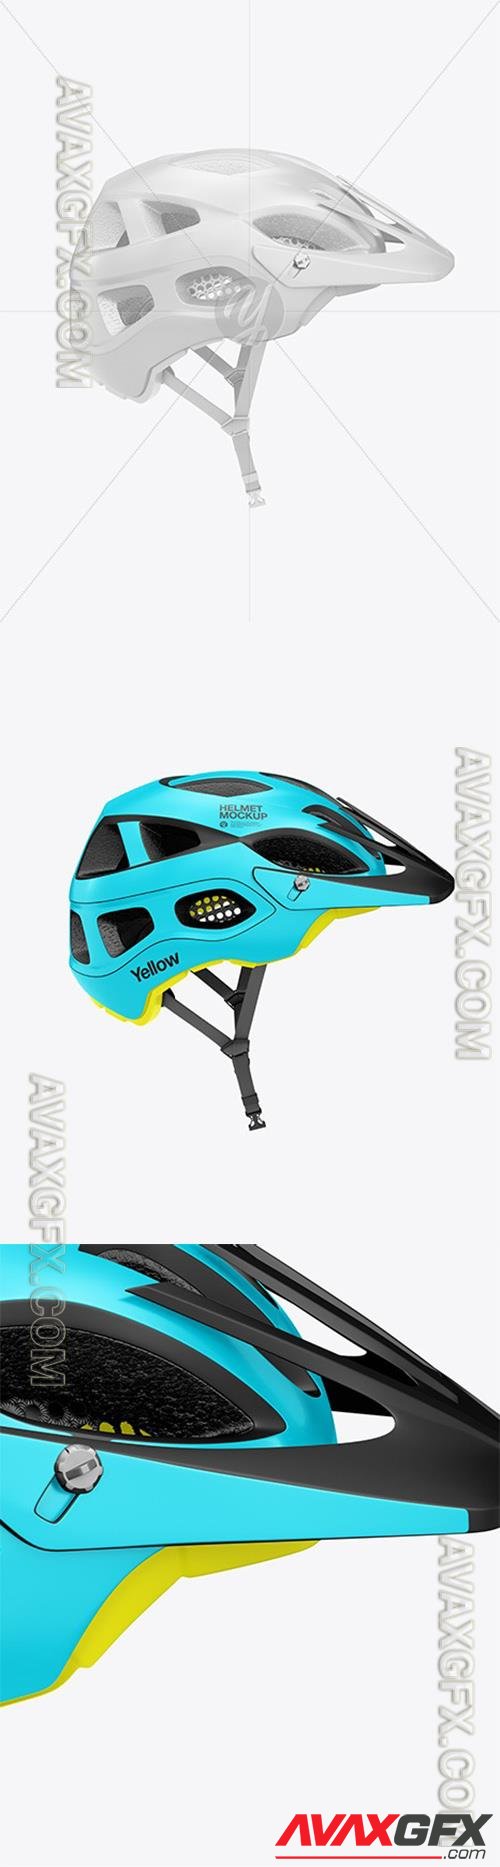 Cycling Helmet Mockup 97304